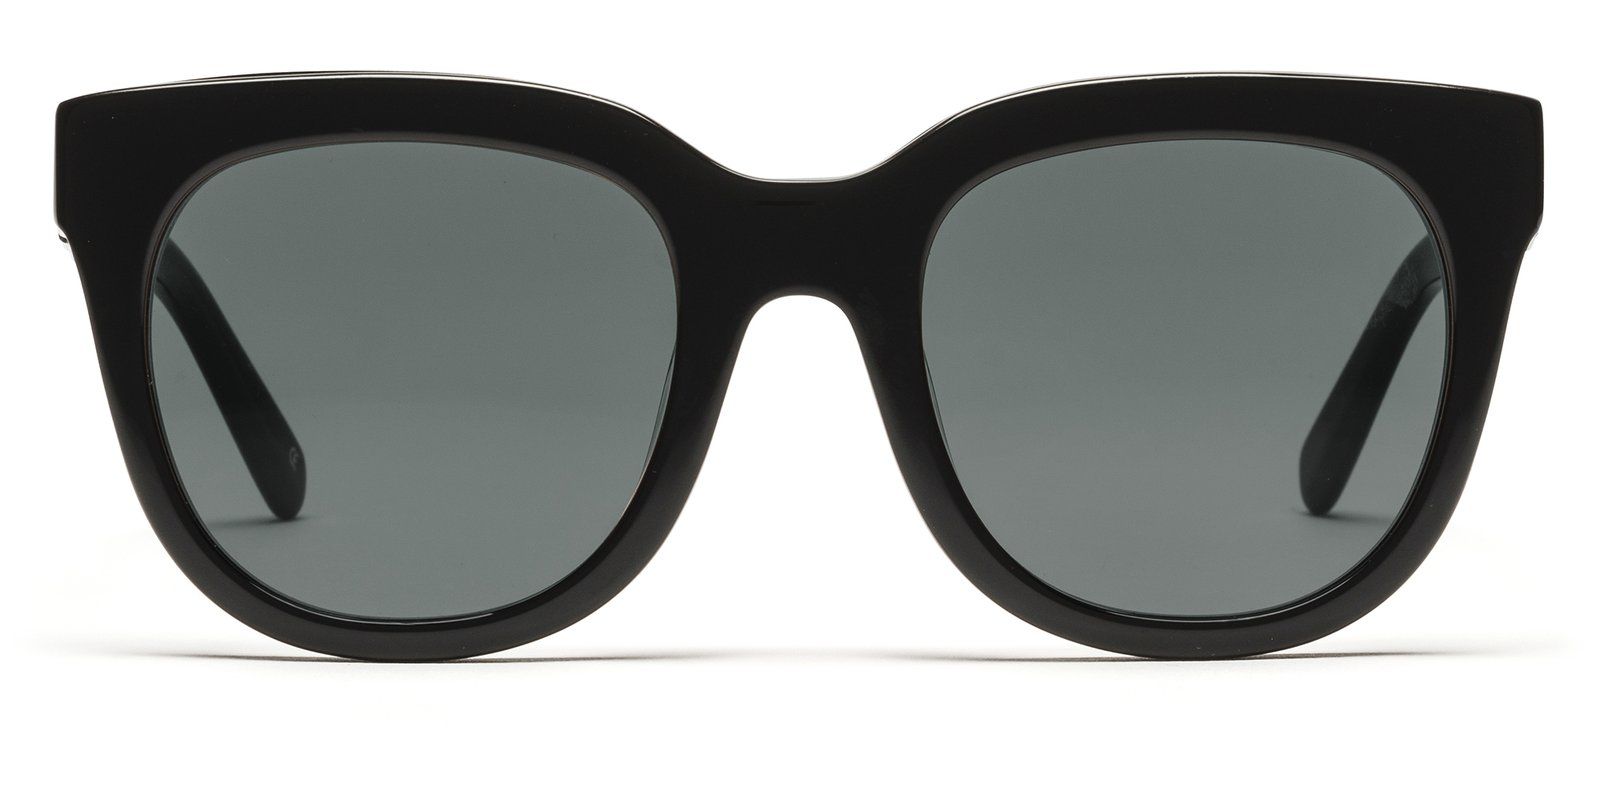 Moore 01 Sunglasses